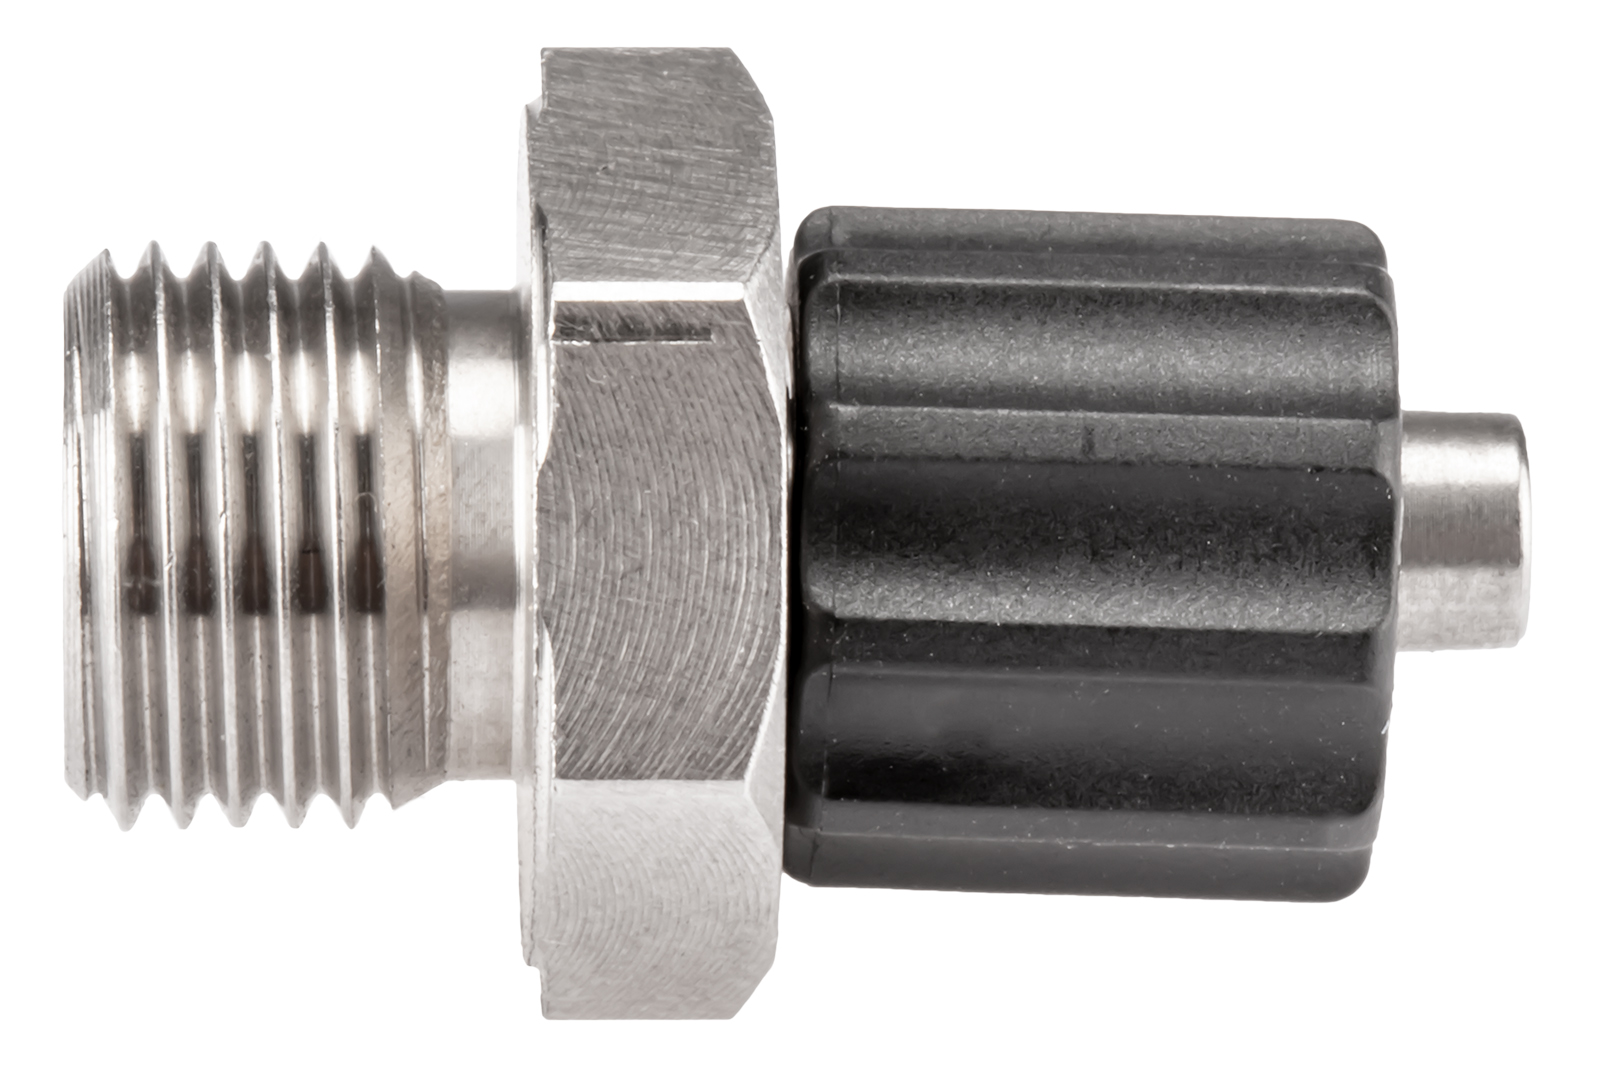 Luer-Lock for retraction valve